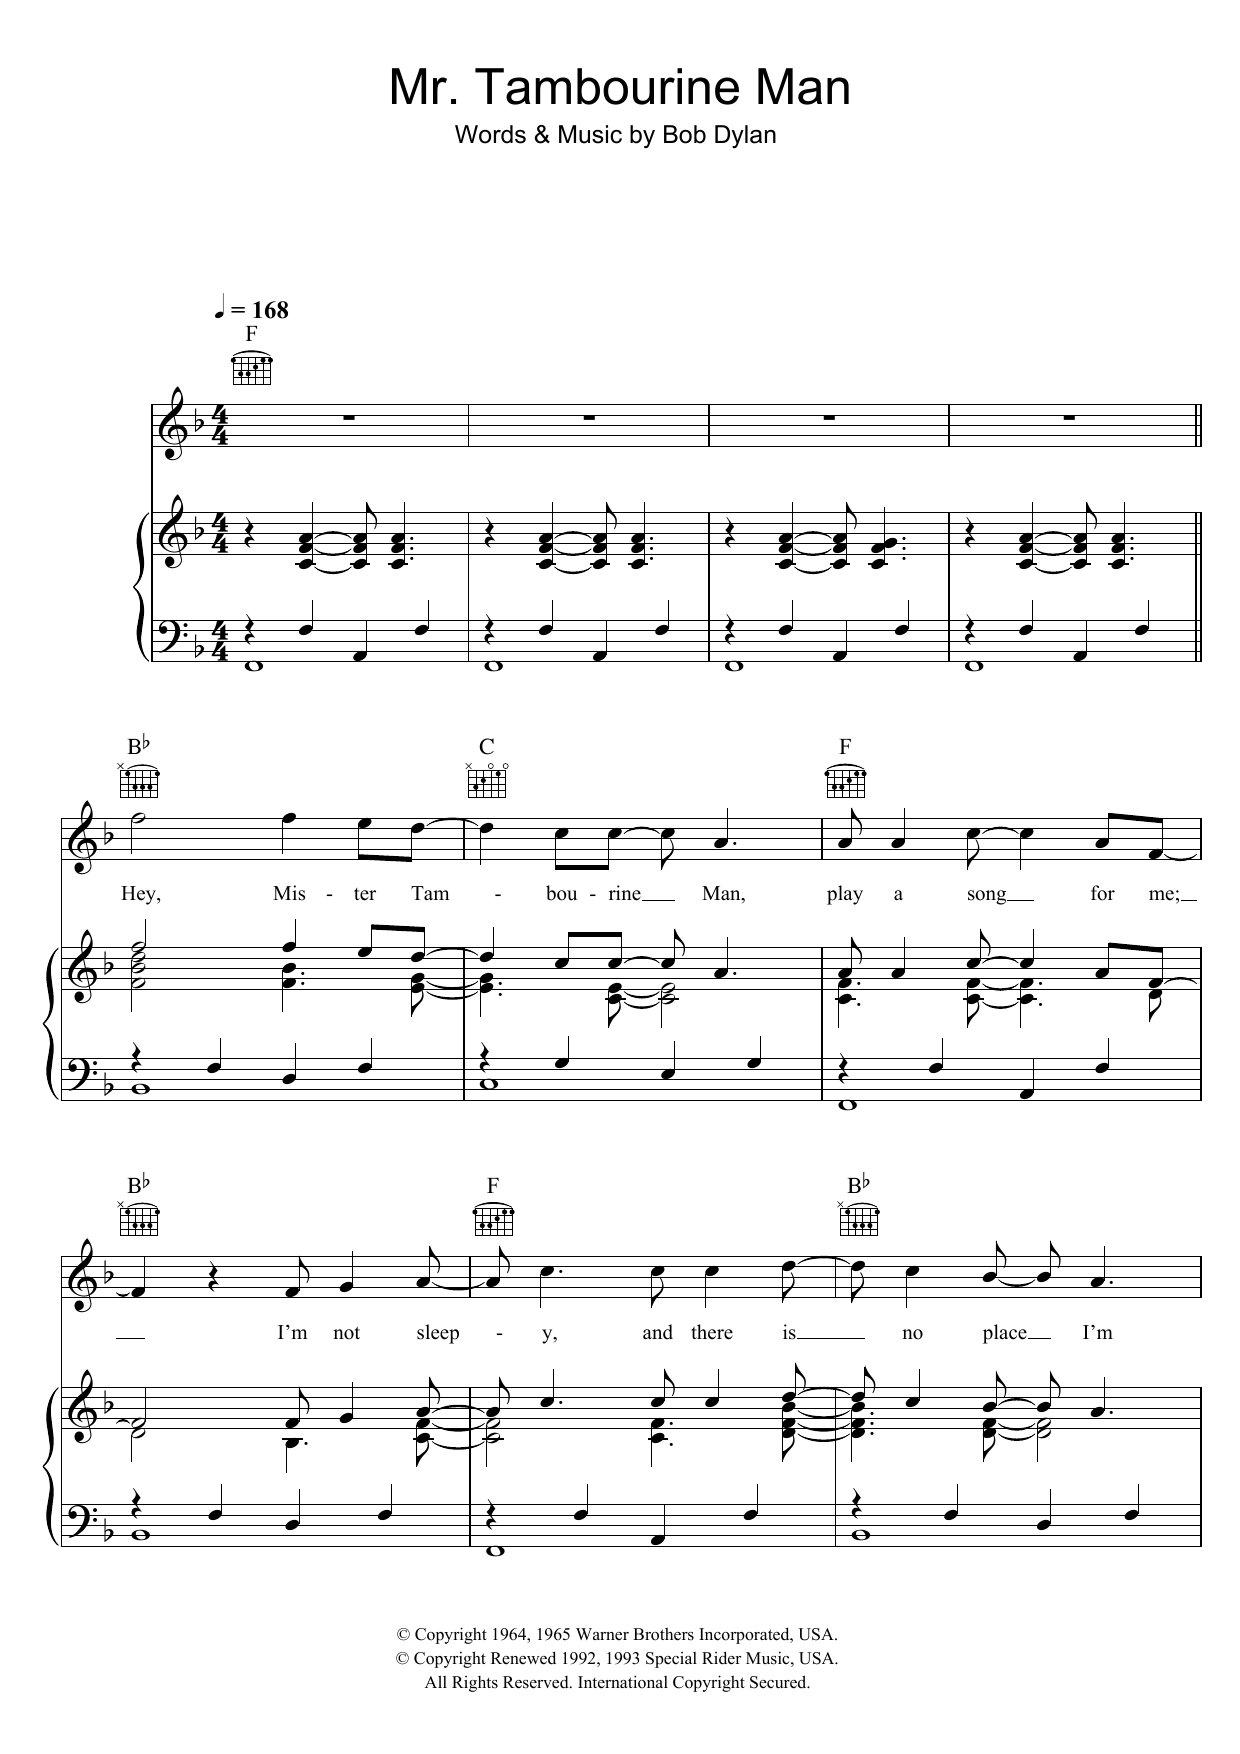 Bob Dylan Mr. Tambourine Man Sheet Music Notes & Chords for Keyboard - Download or Print PDF